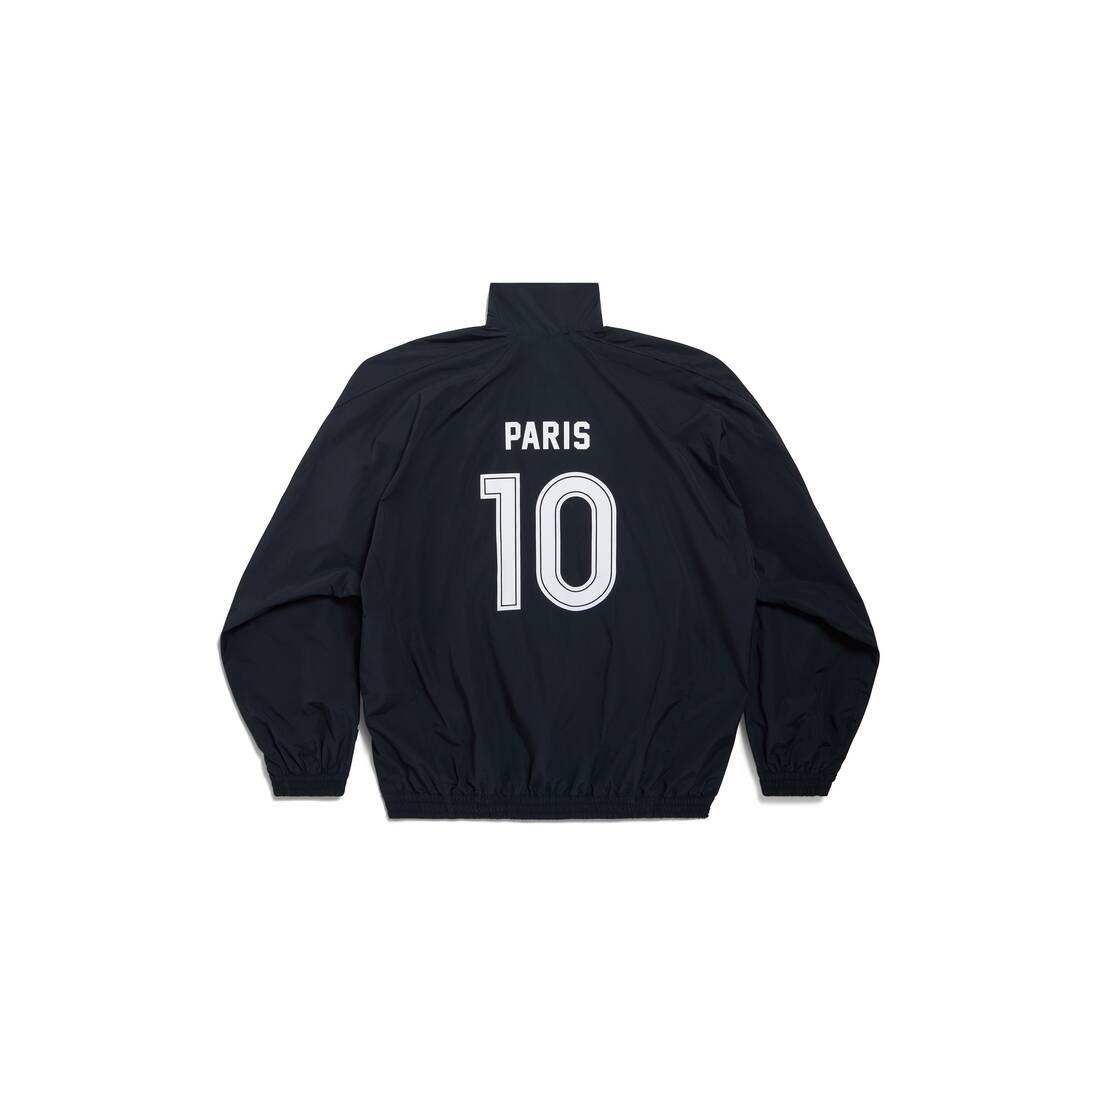 Men's Paris Soccer Tracksuit Jacket in Black - 6